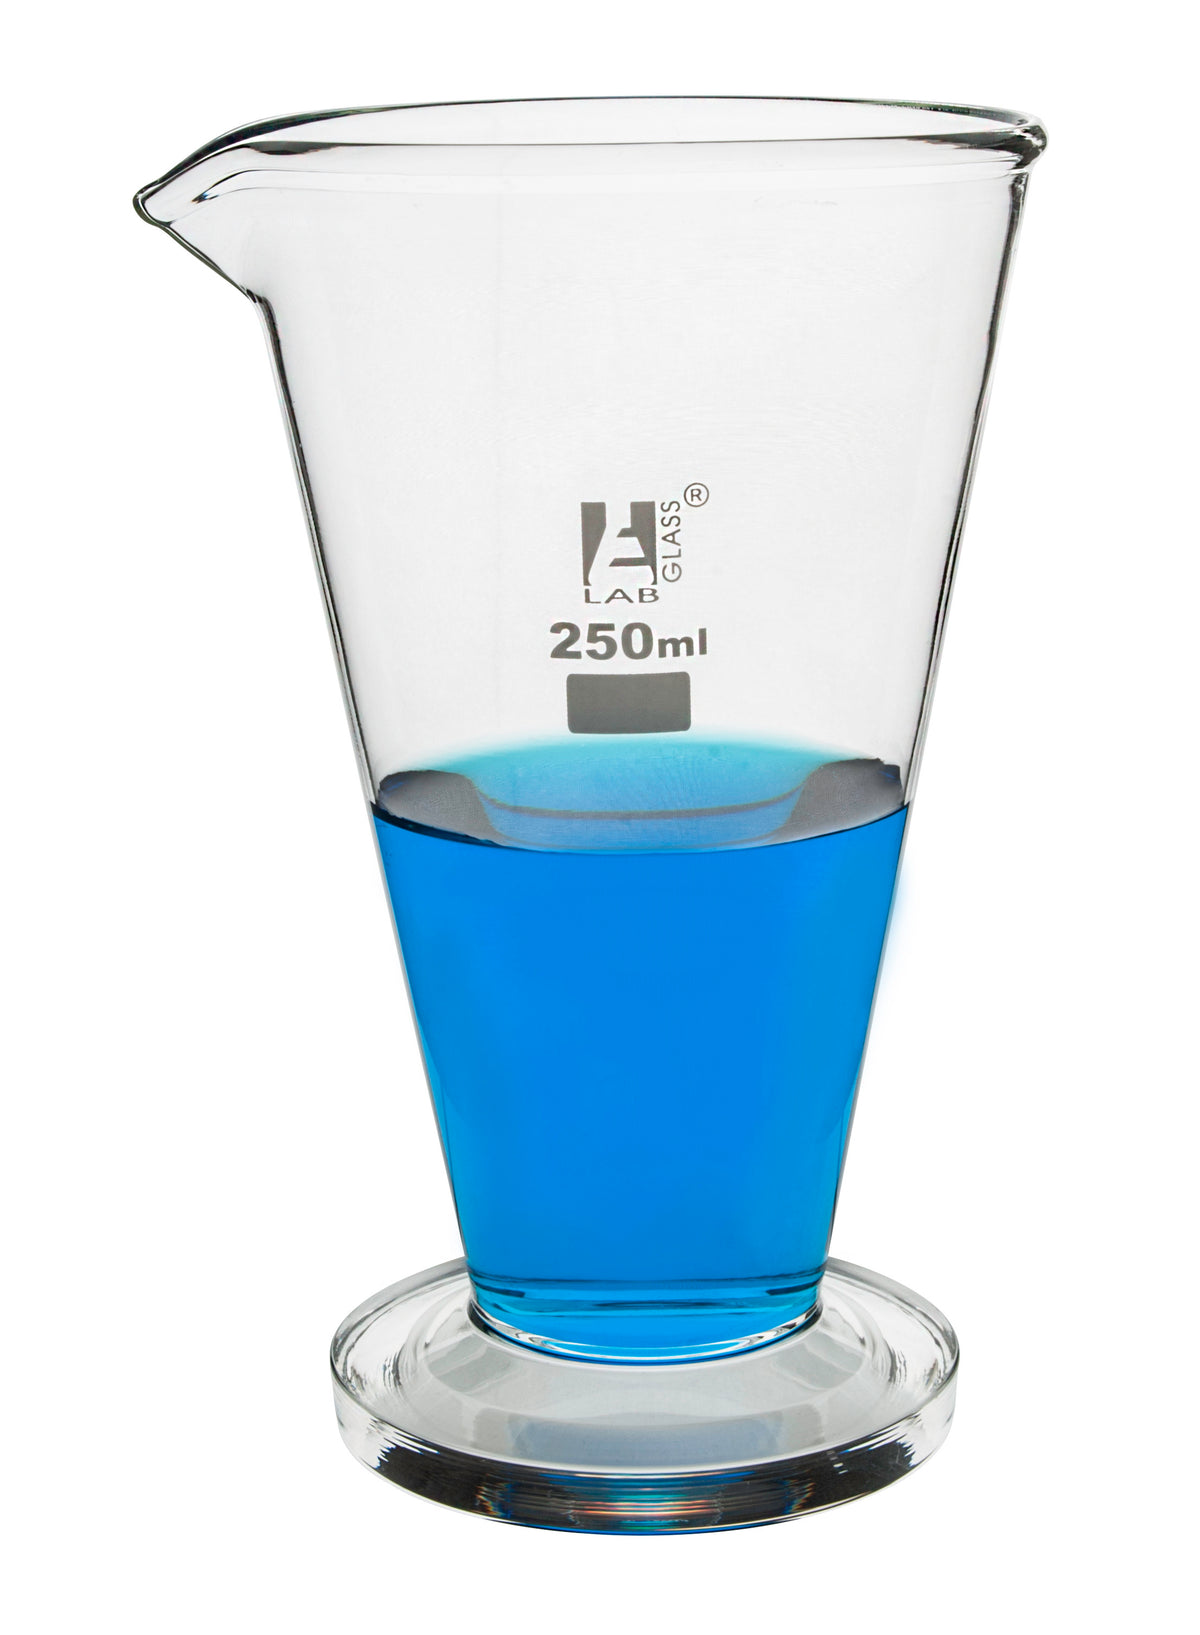 Why Is Borosilicate Glass Preferred for Lab Glassware? - USA Lab